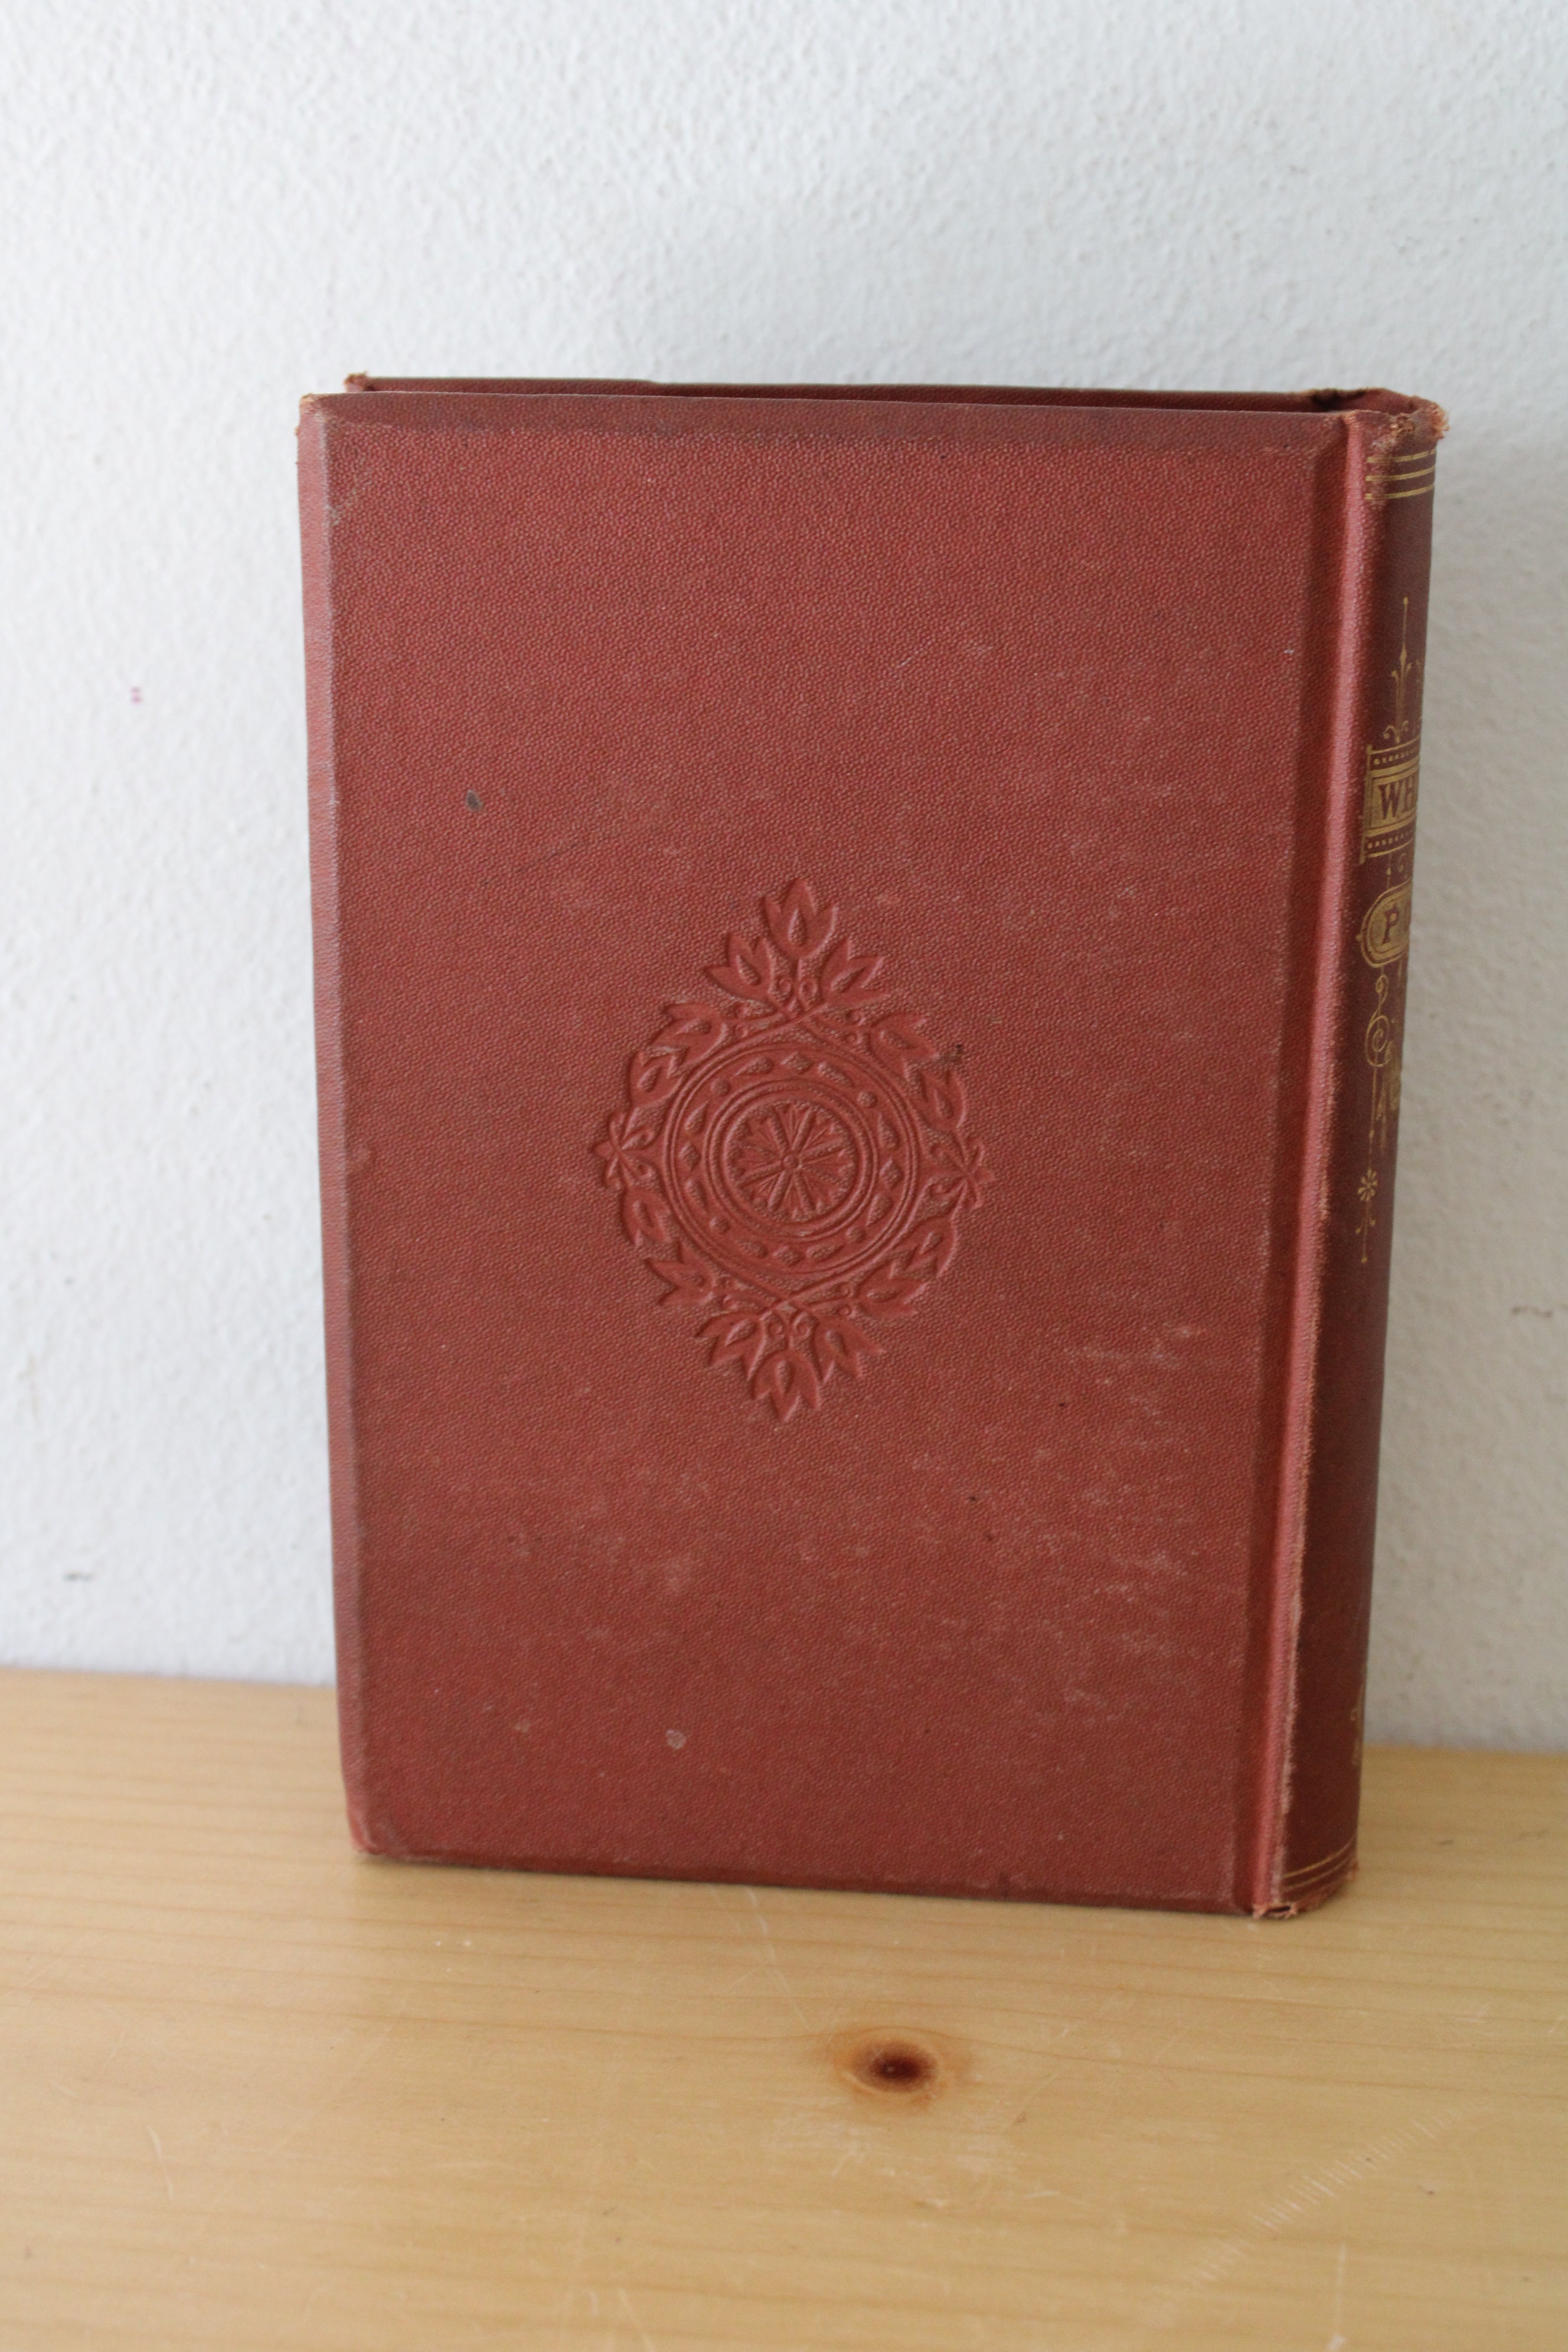 Whittier's Poems Complete 1880 Edition By John Greenleaf Whittier